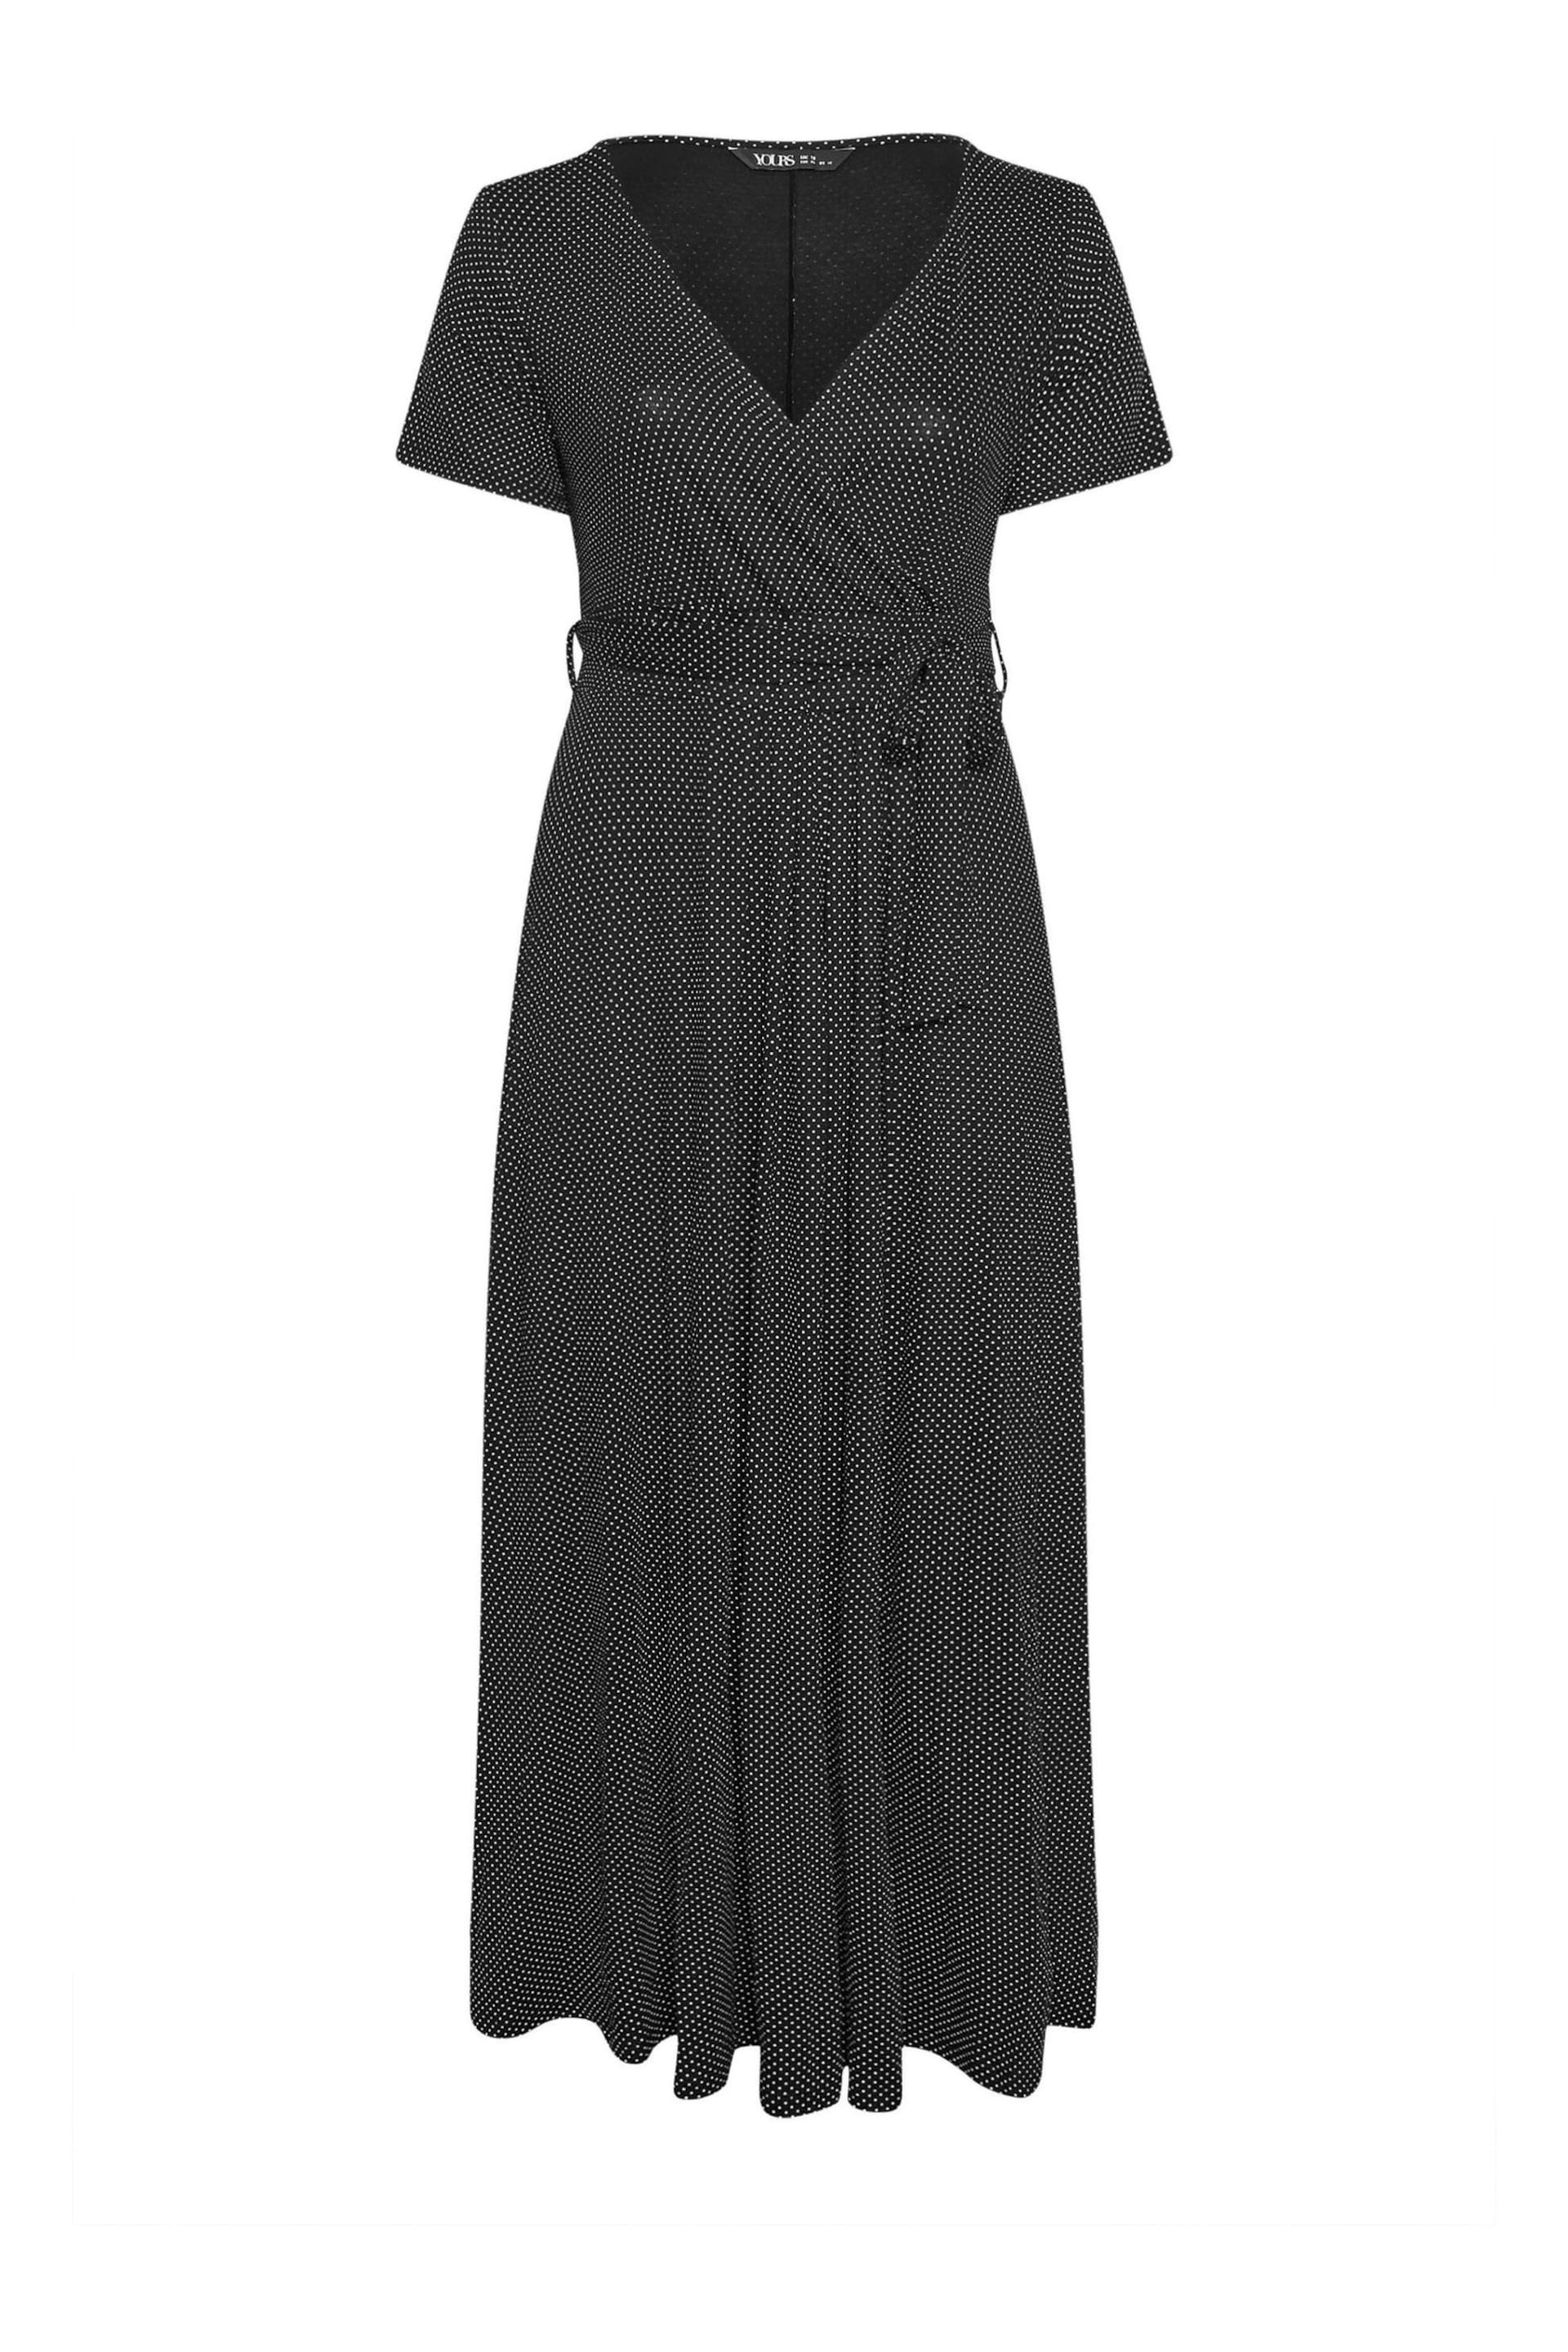 Yours Curve Black Dot Print Wrap Maxi Dress - Image 5 of 5